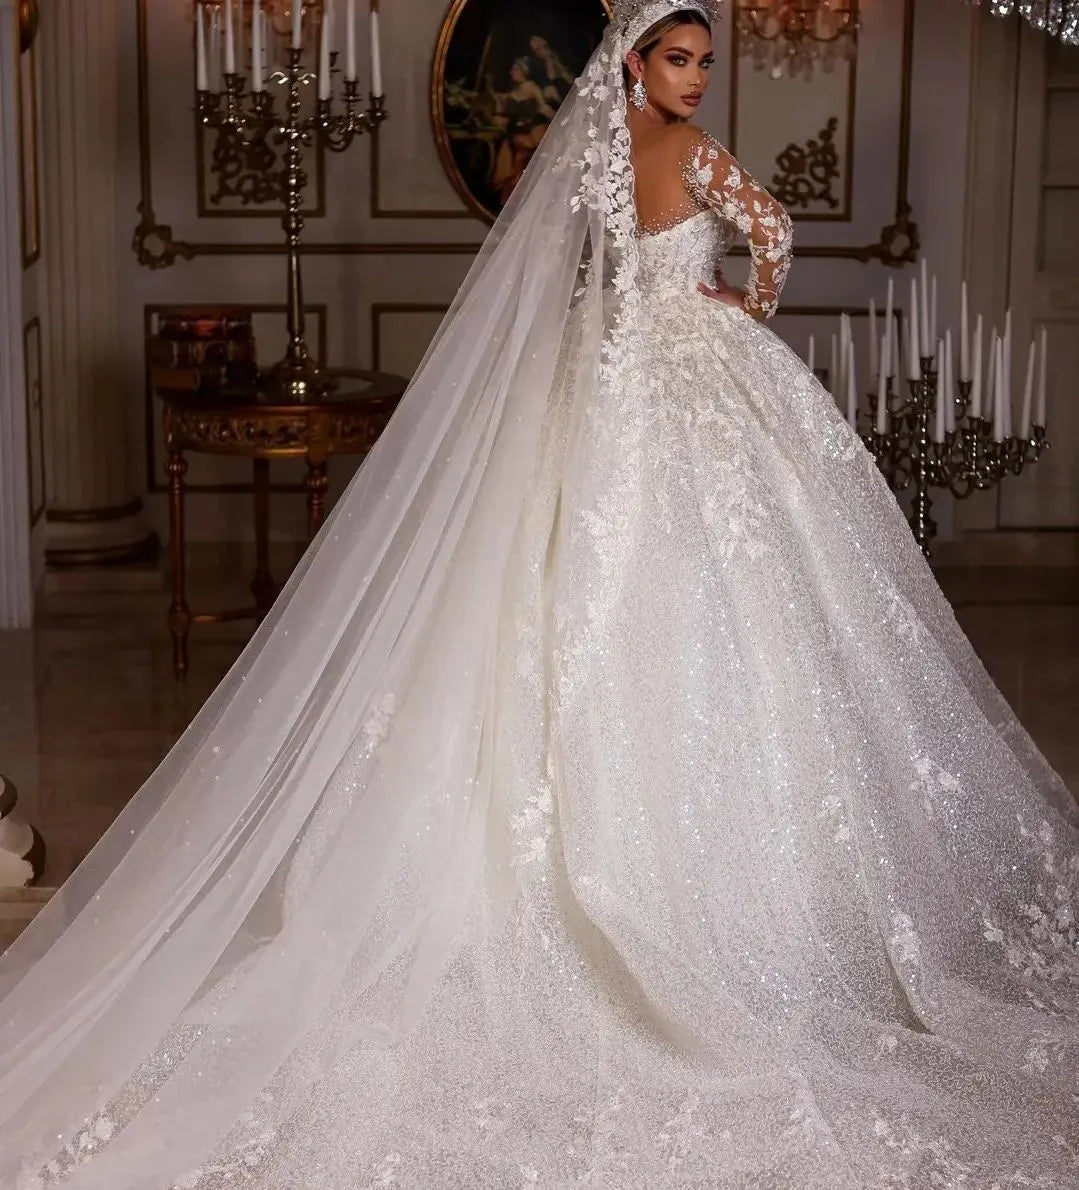 Luxury Glitter Tulle Bride Gowns